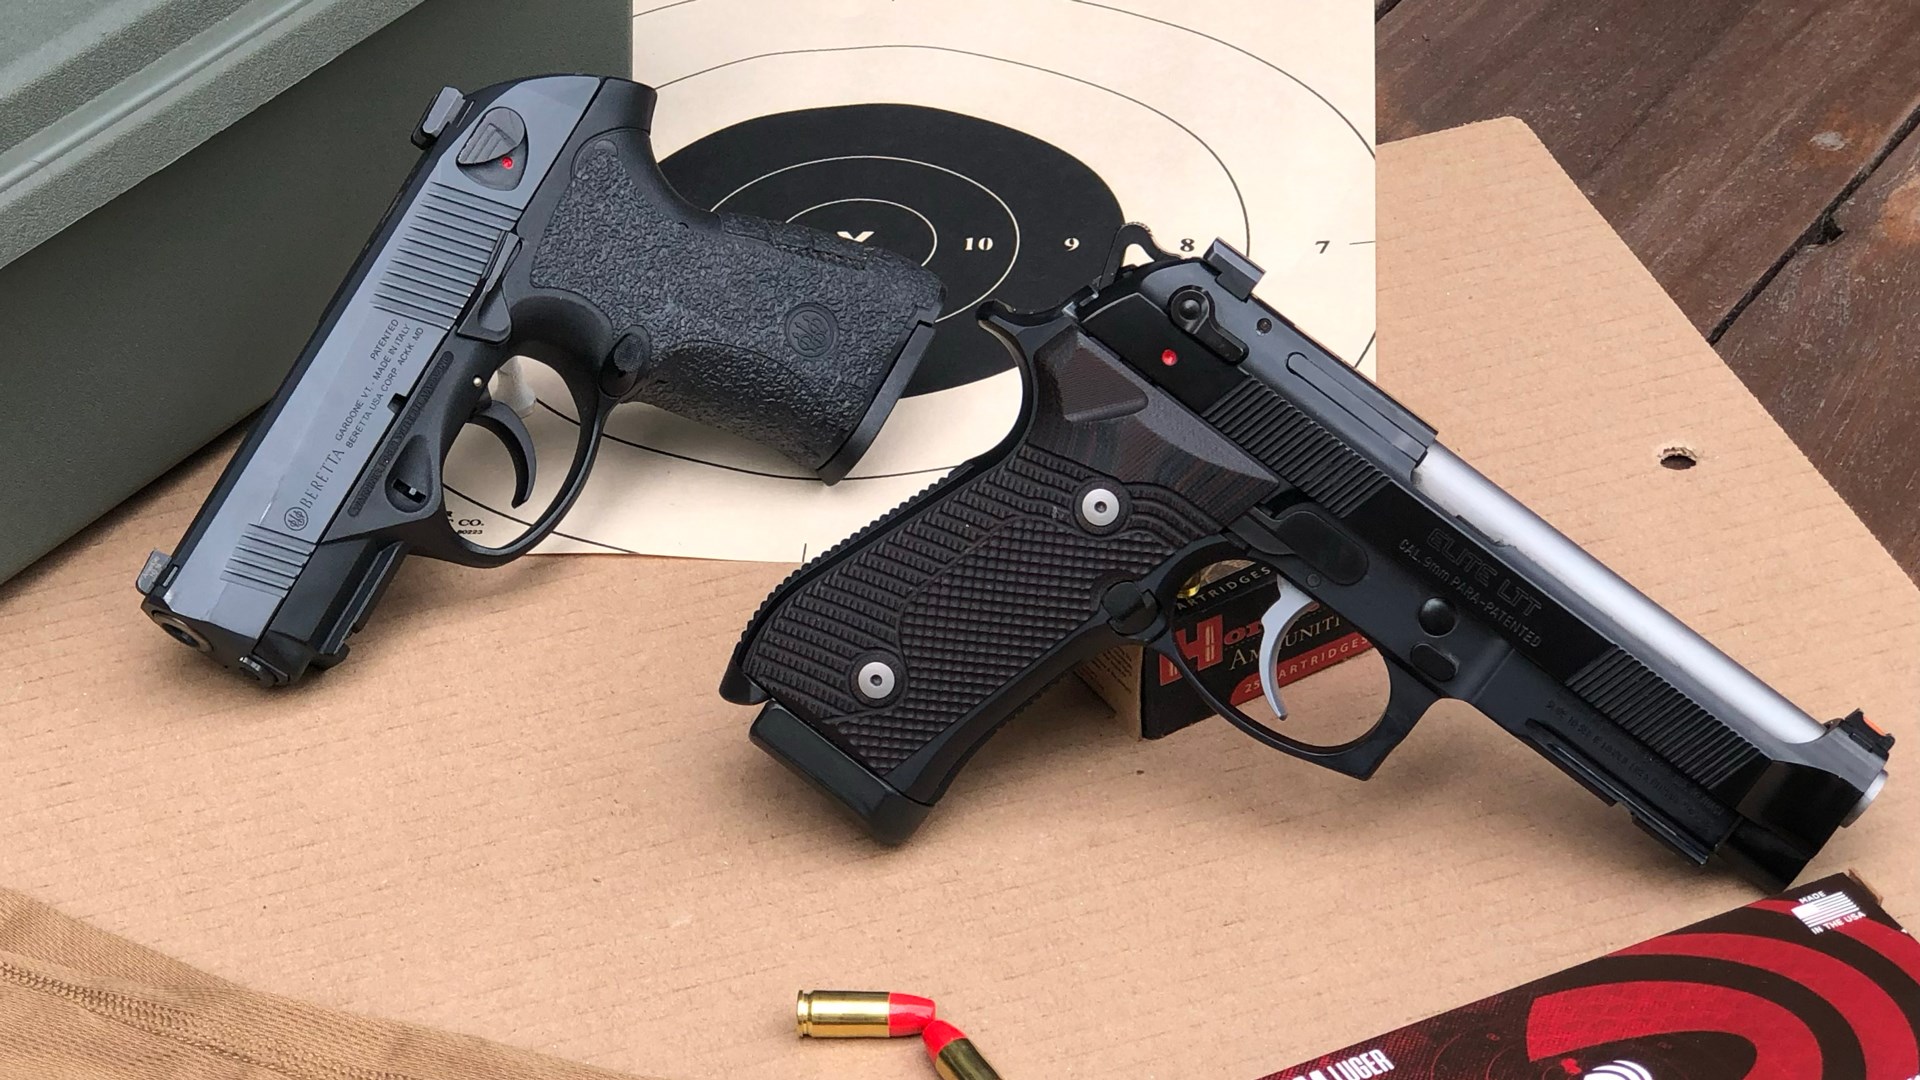 two pistols on cardboard target backer round black bullseye x rings ammunition box table wood background